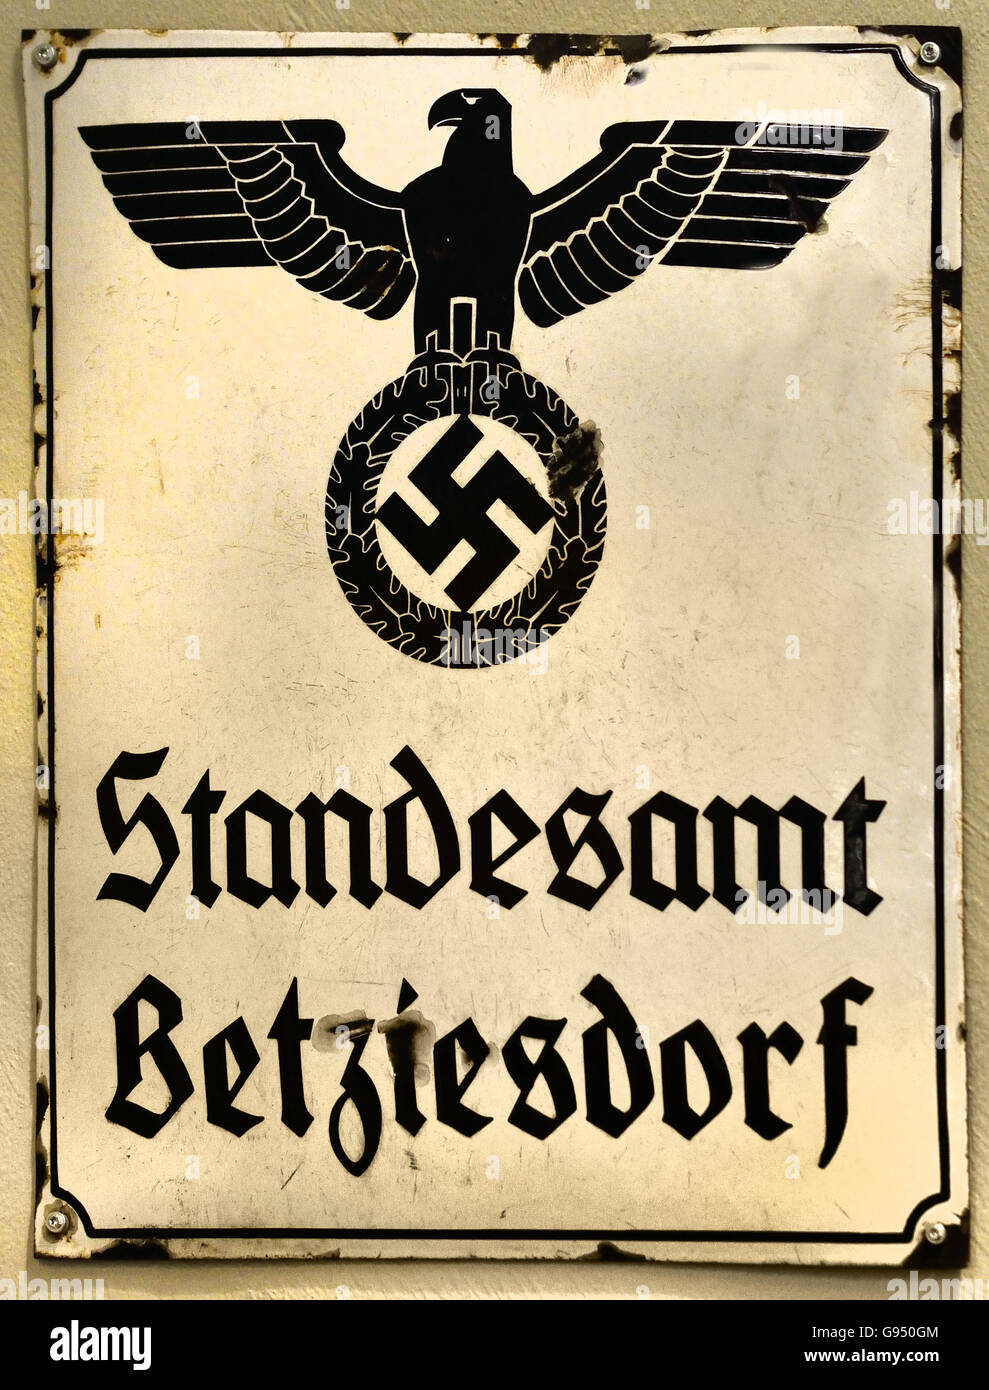 Bureau d'enregistrement - Betzdorf Standesamt signe Betzdorf Berlin Allemagne Nazi Swastika Banque D'Images